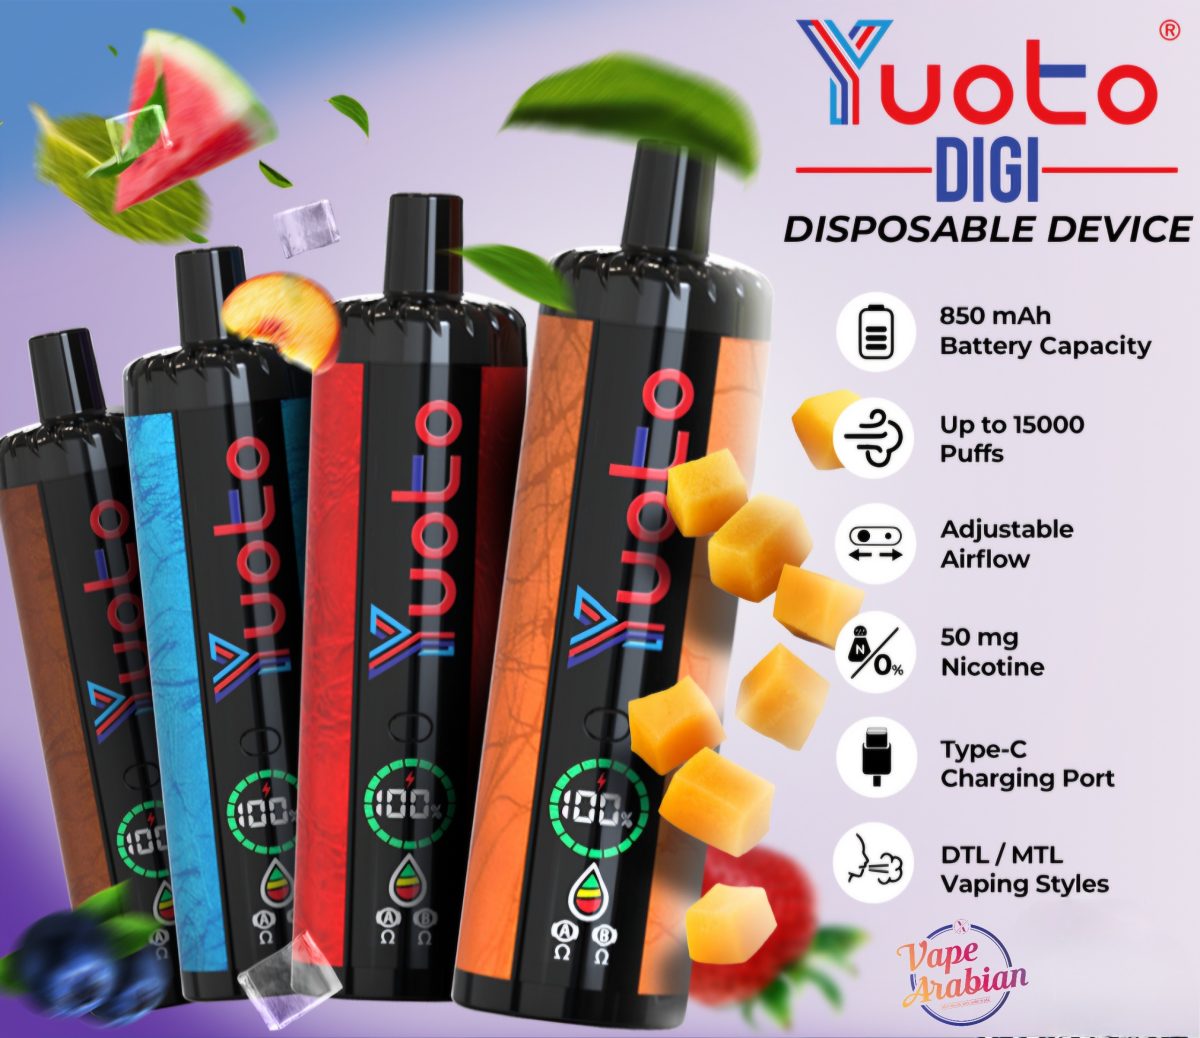 Yuoto Digi 15000 Puffs Disposable Vape In UAE